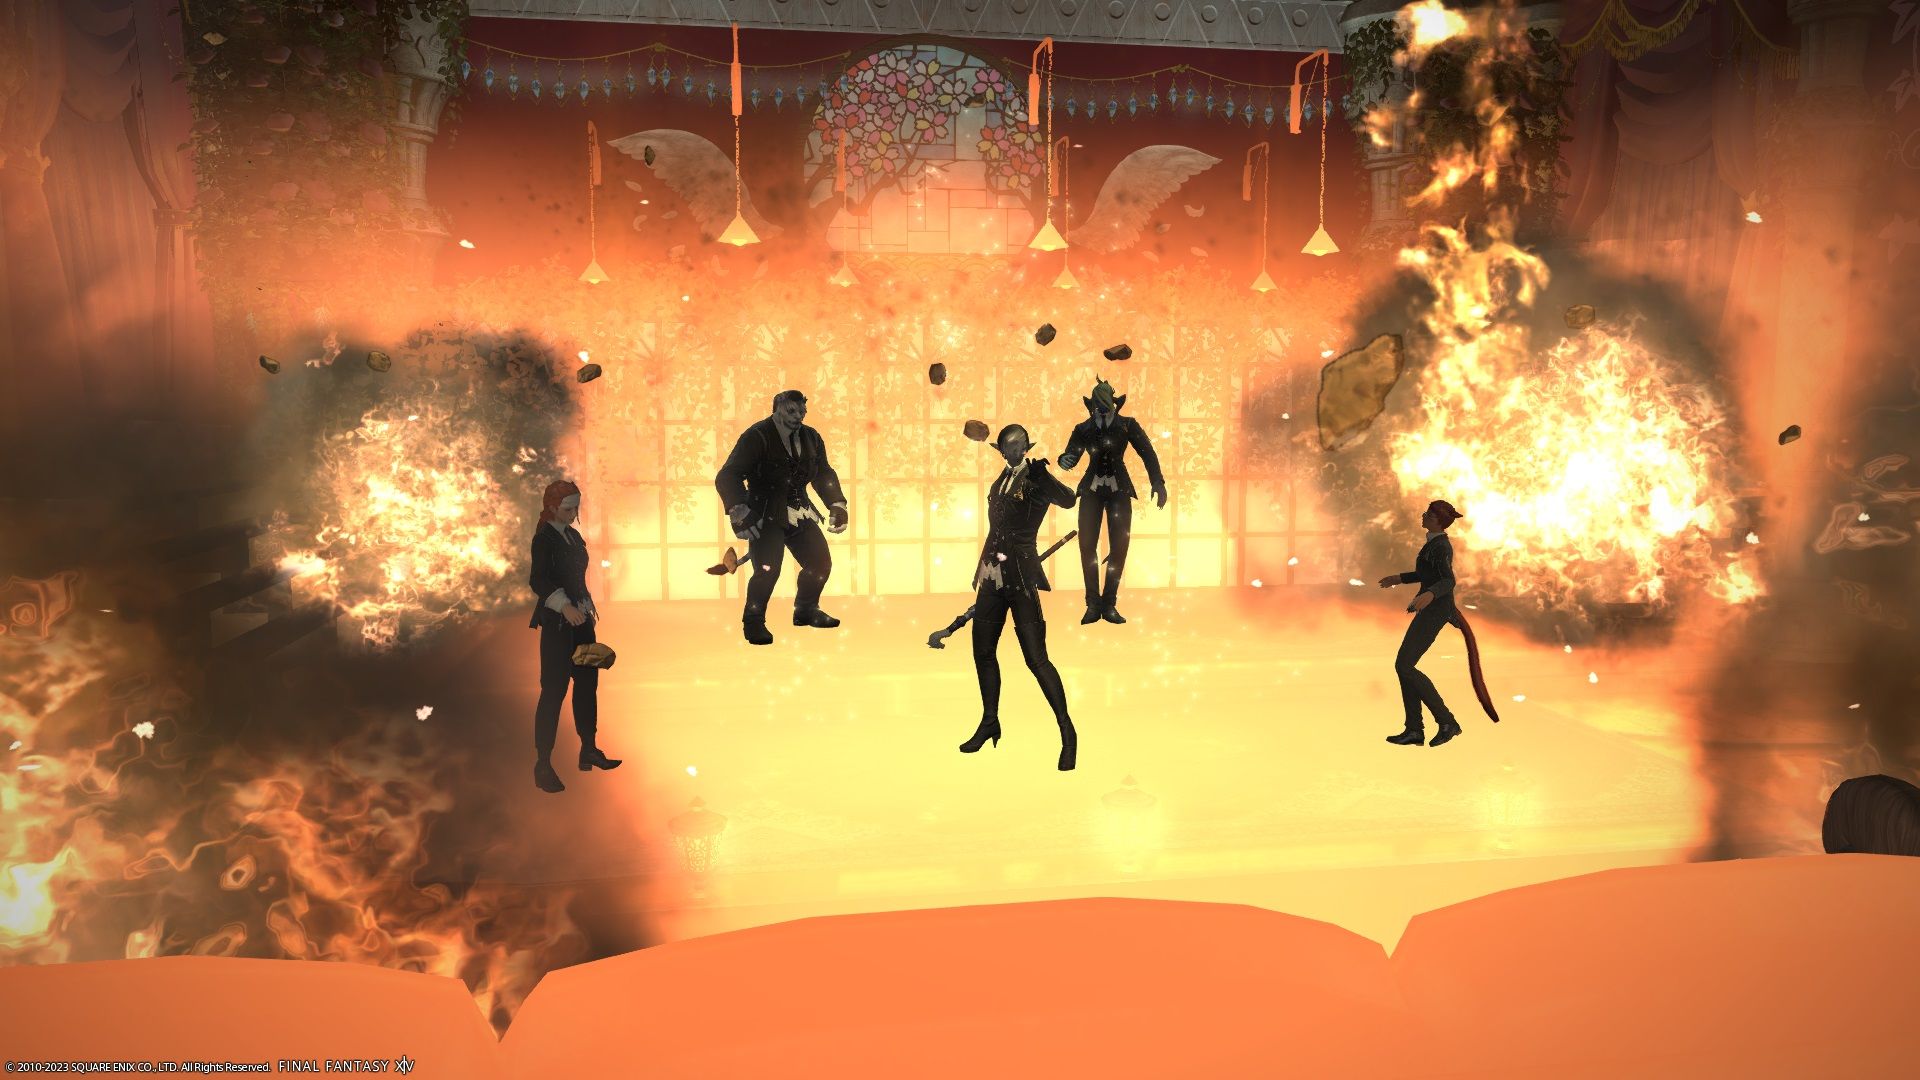 Final Fantasy 14 - Esprit's Junior Dancers Showcase with explosive effects.